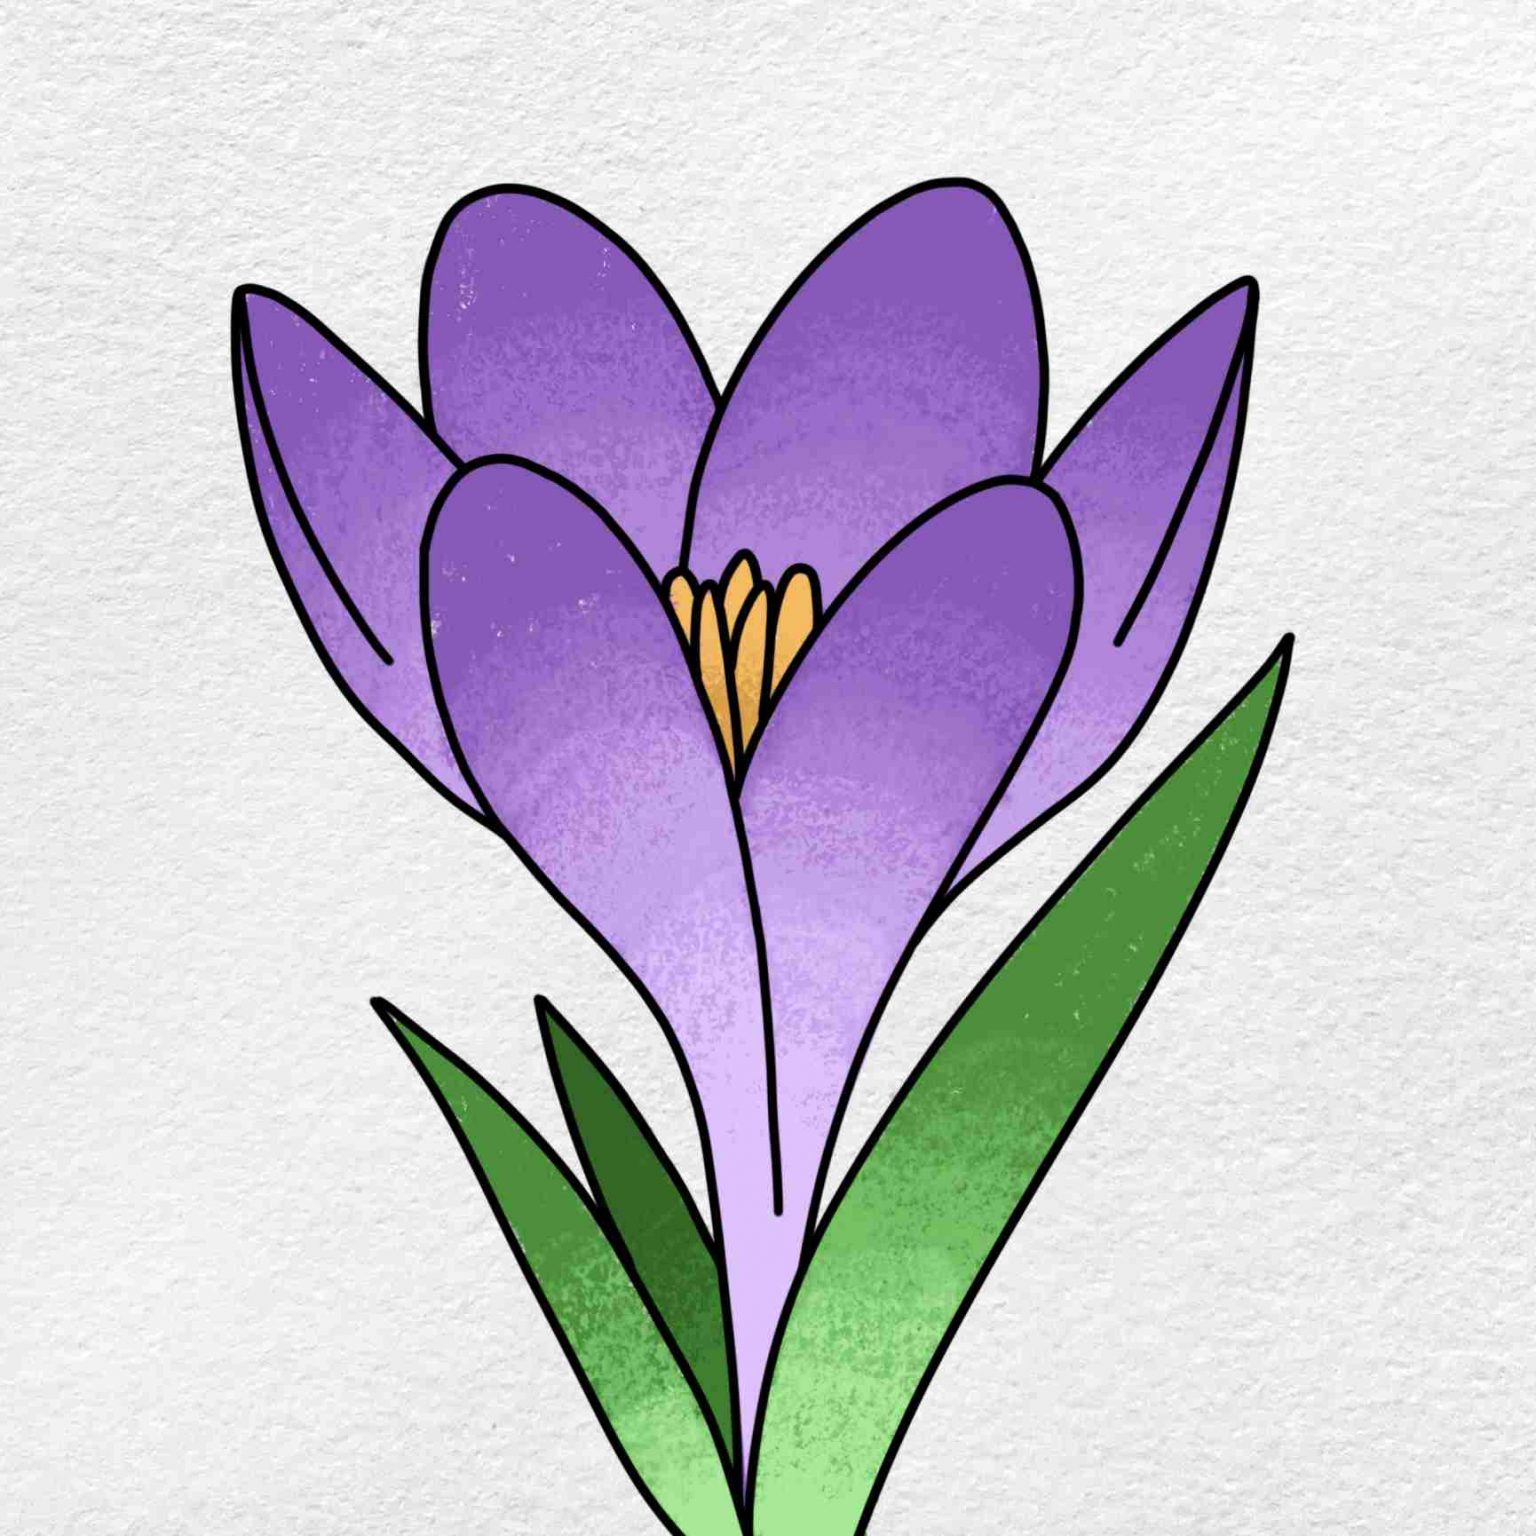 how to draw a crocus flower